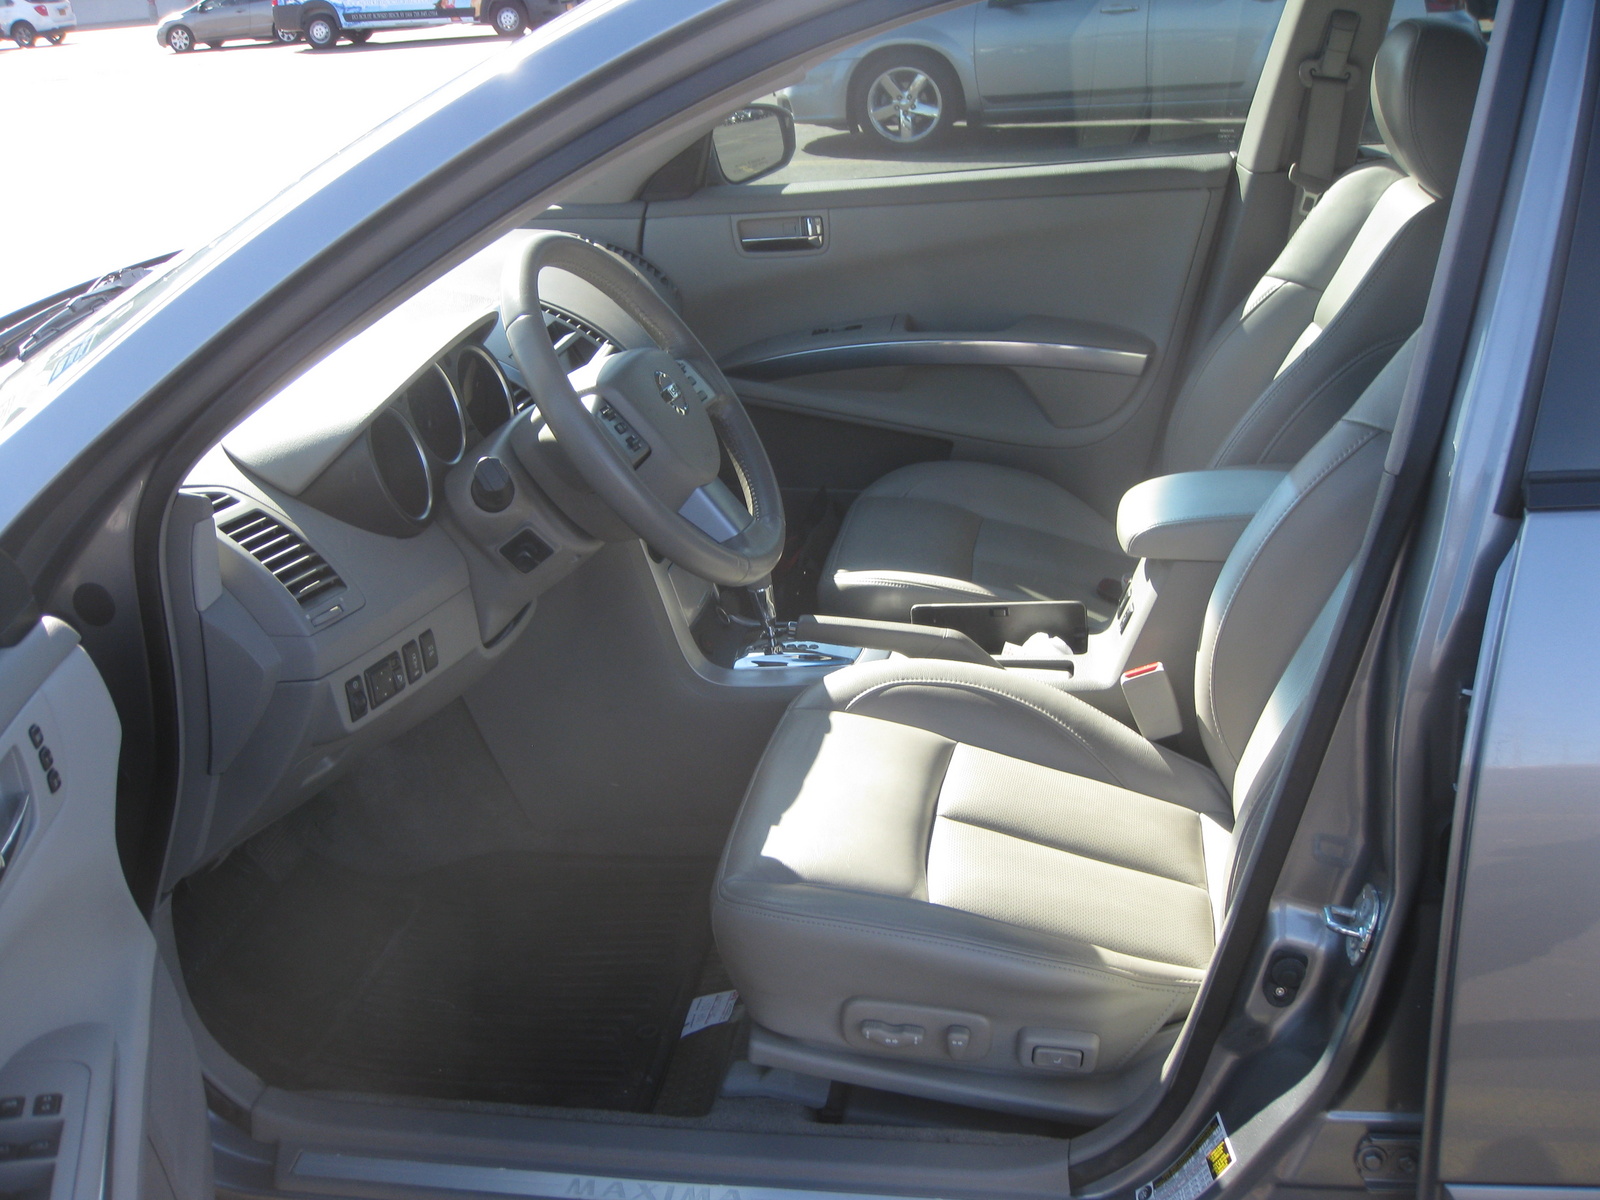 2008 Nissan maxima interior specs #2